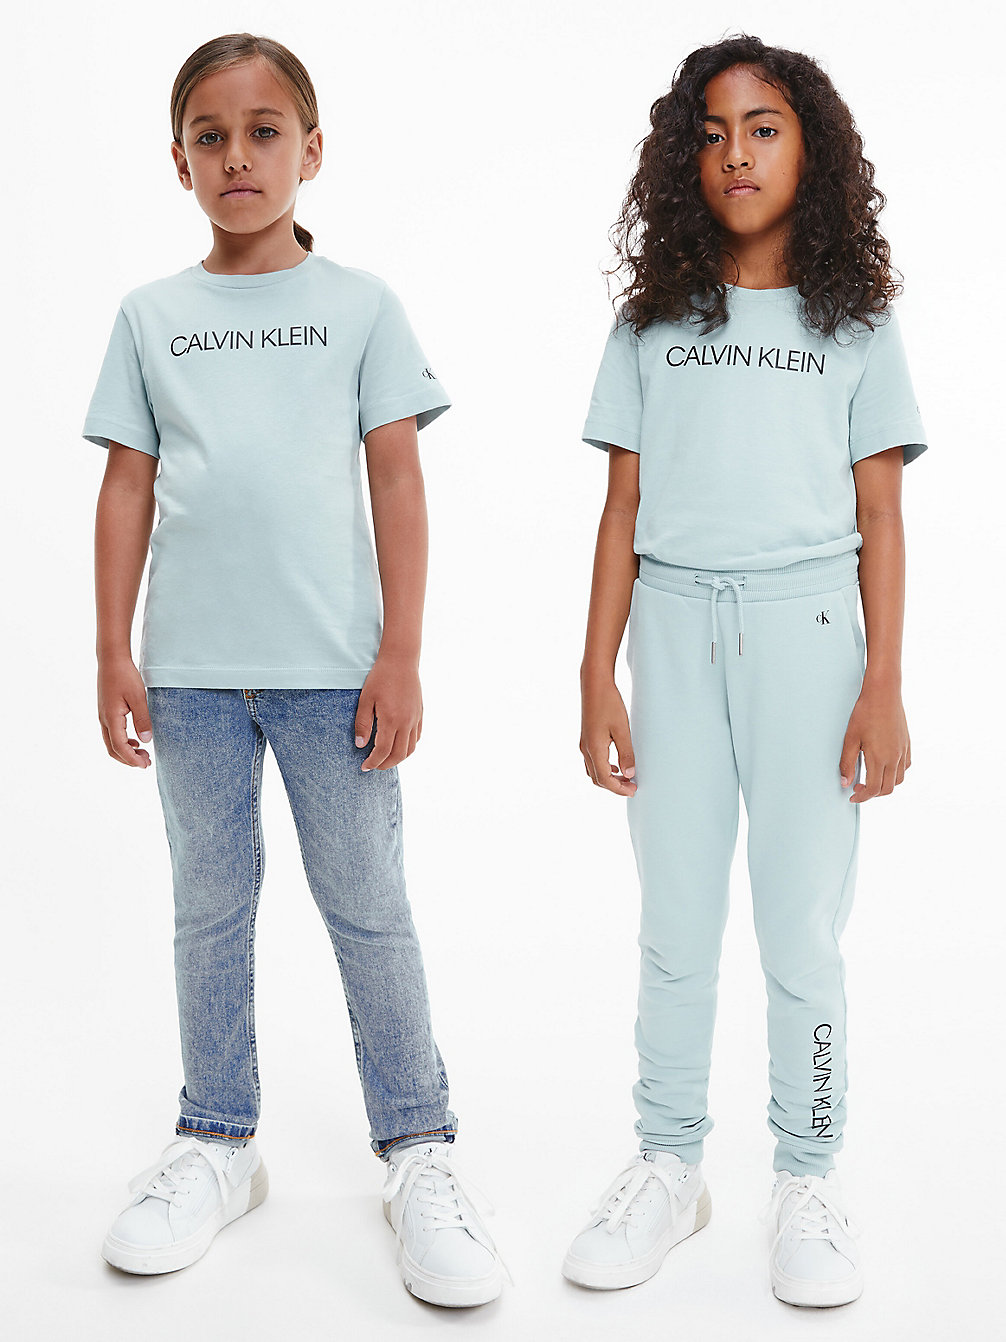 Camiseta Unisex De Algodón Orgánico Con Logo > MUTED AQUA > undefined kids unisex > Calvin Klein